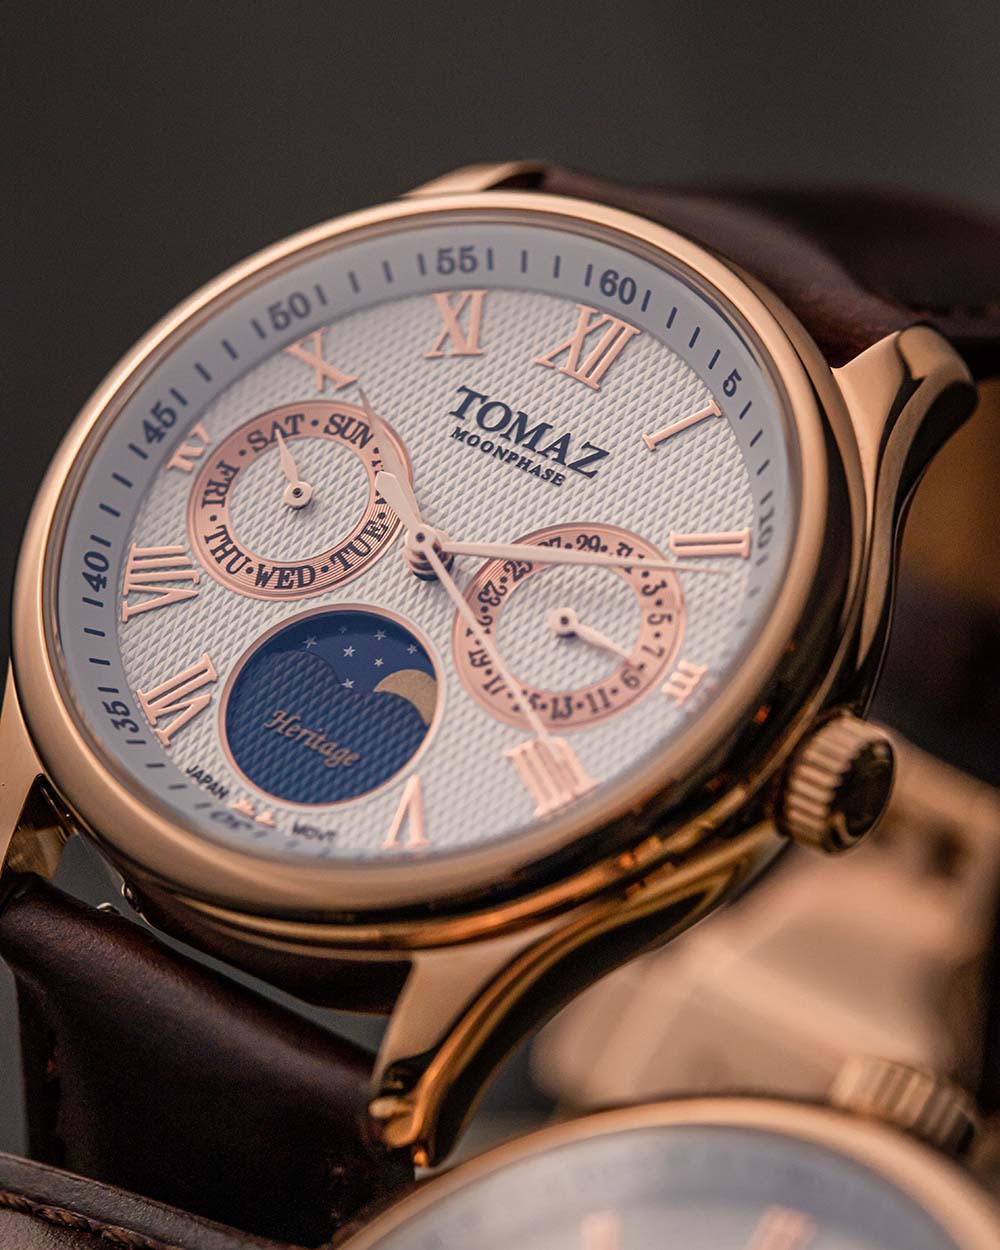 Tomaz Men's Watch TQ003M-D4 (Rose Gold/White) Coffee Leather Strap